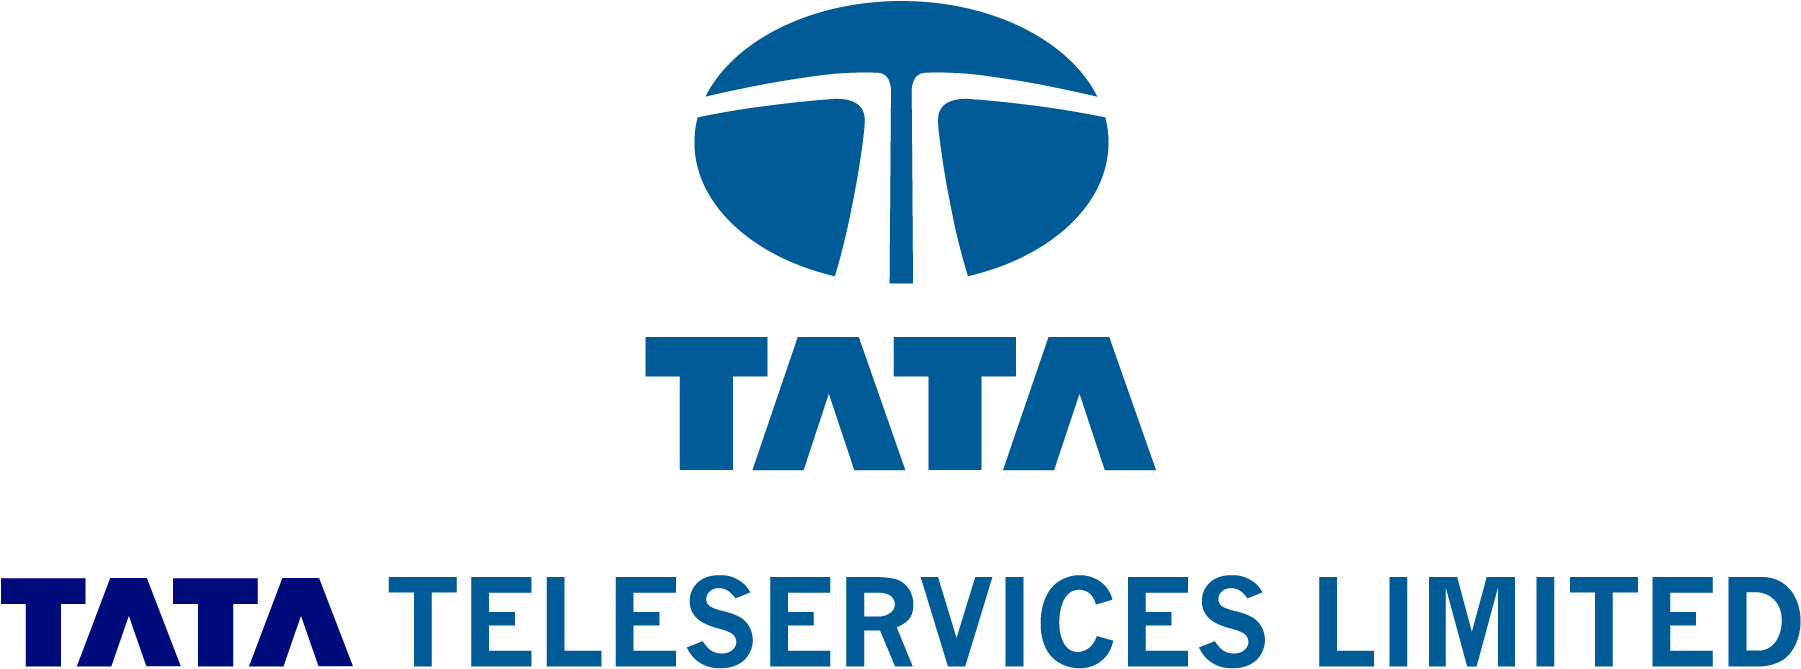 Tata Teleservices Limited Logo